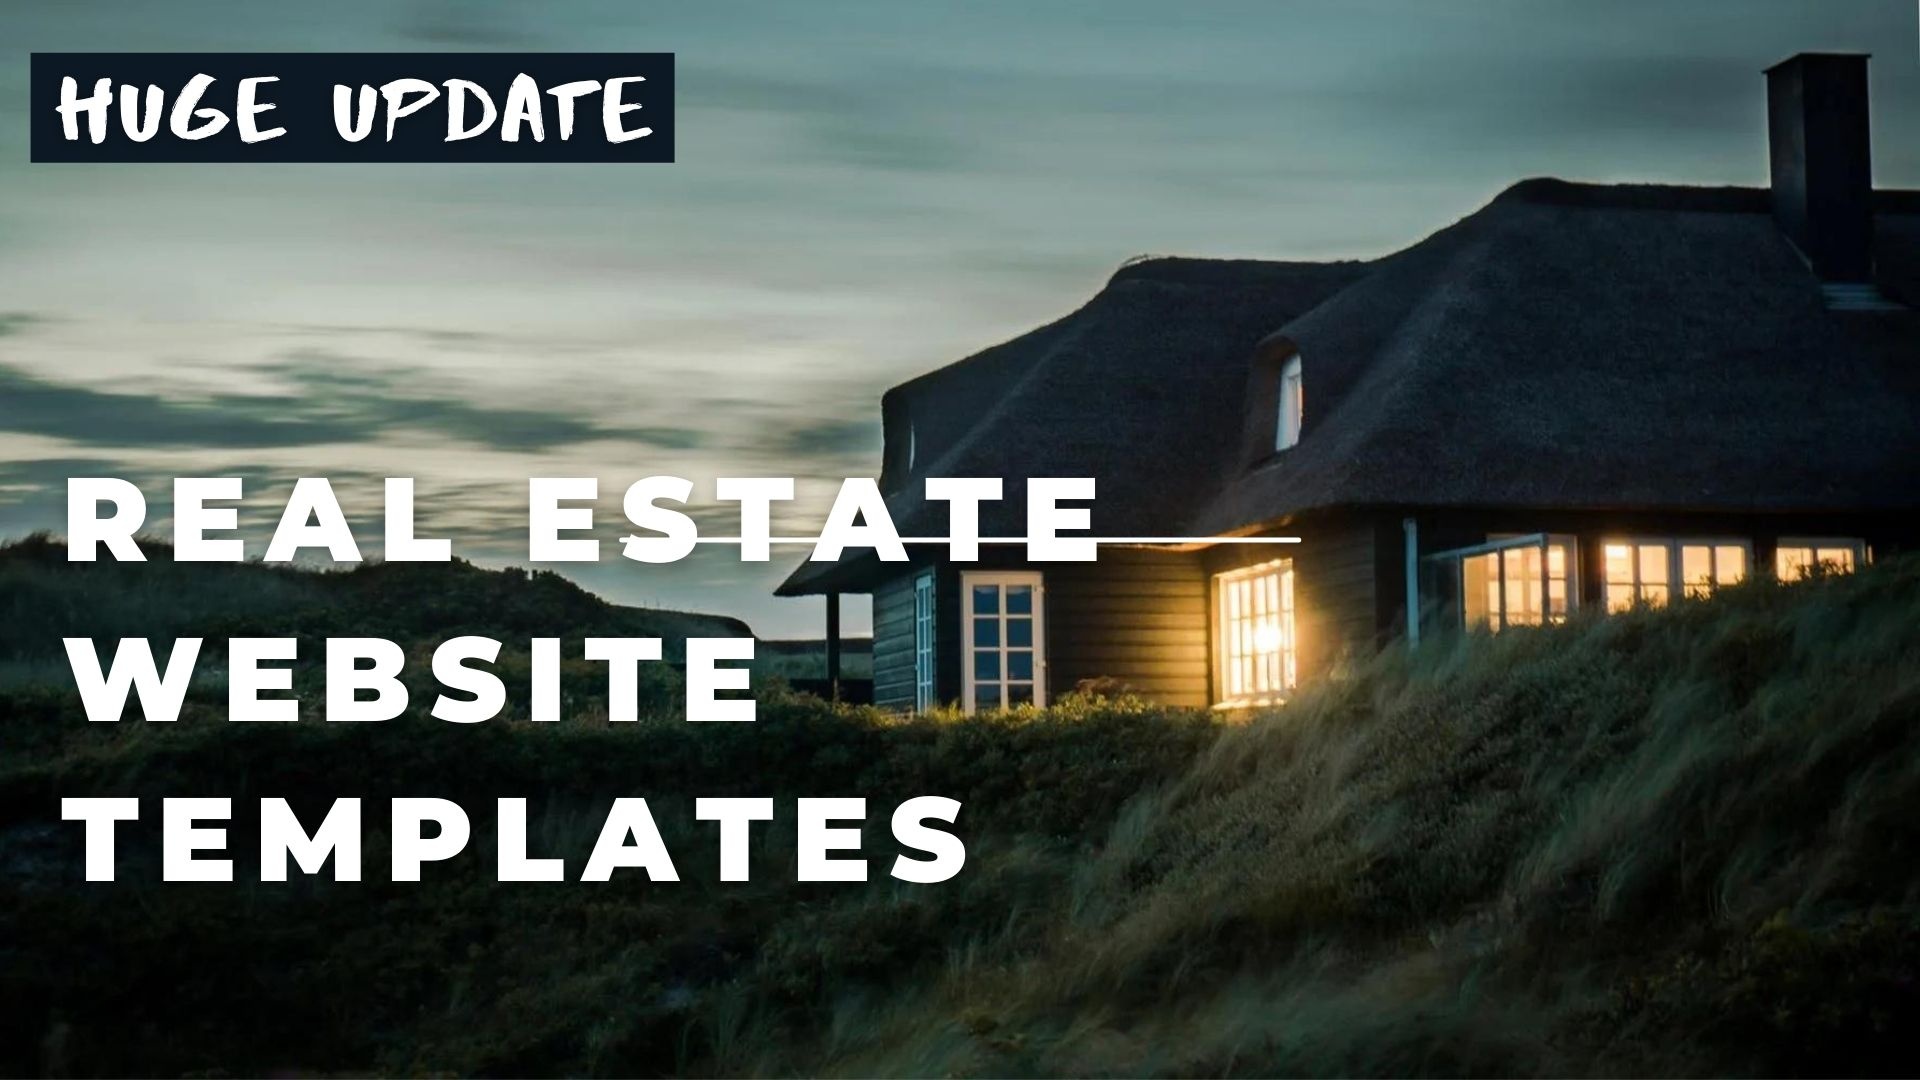 ordasoft Joomla News: Huge Real Estate Website Templates Update